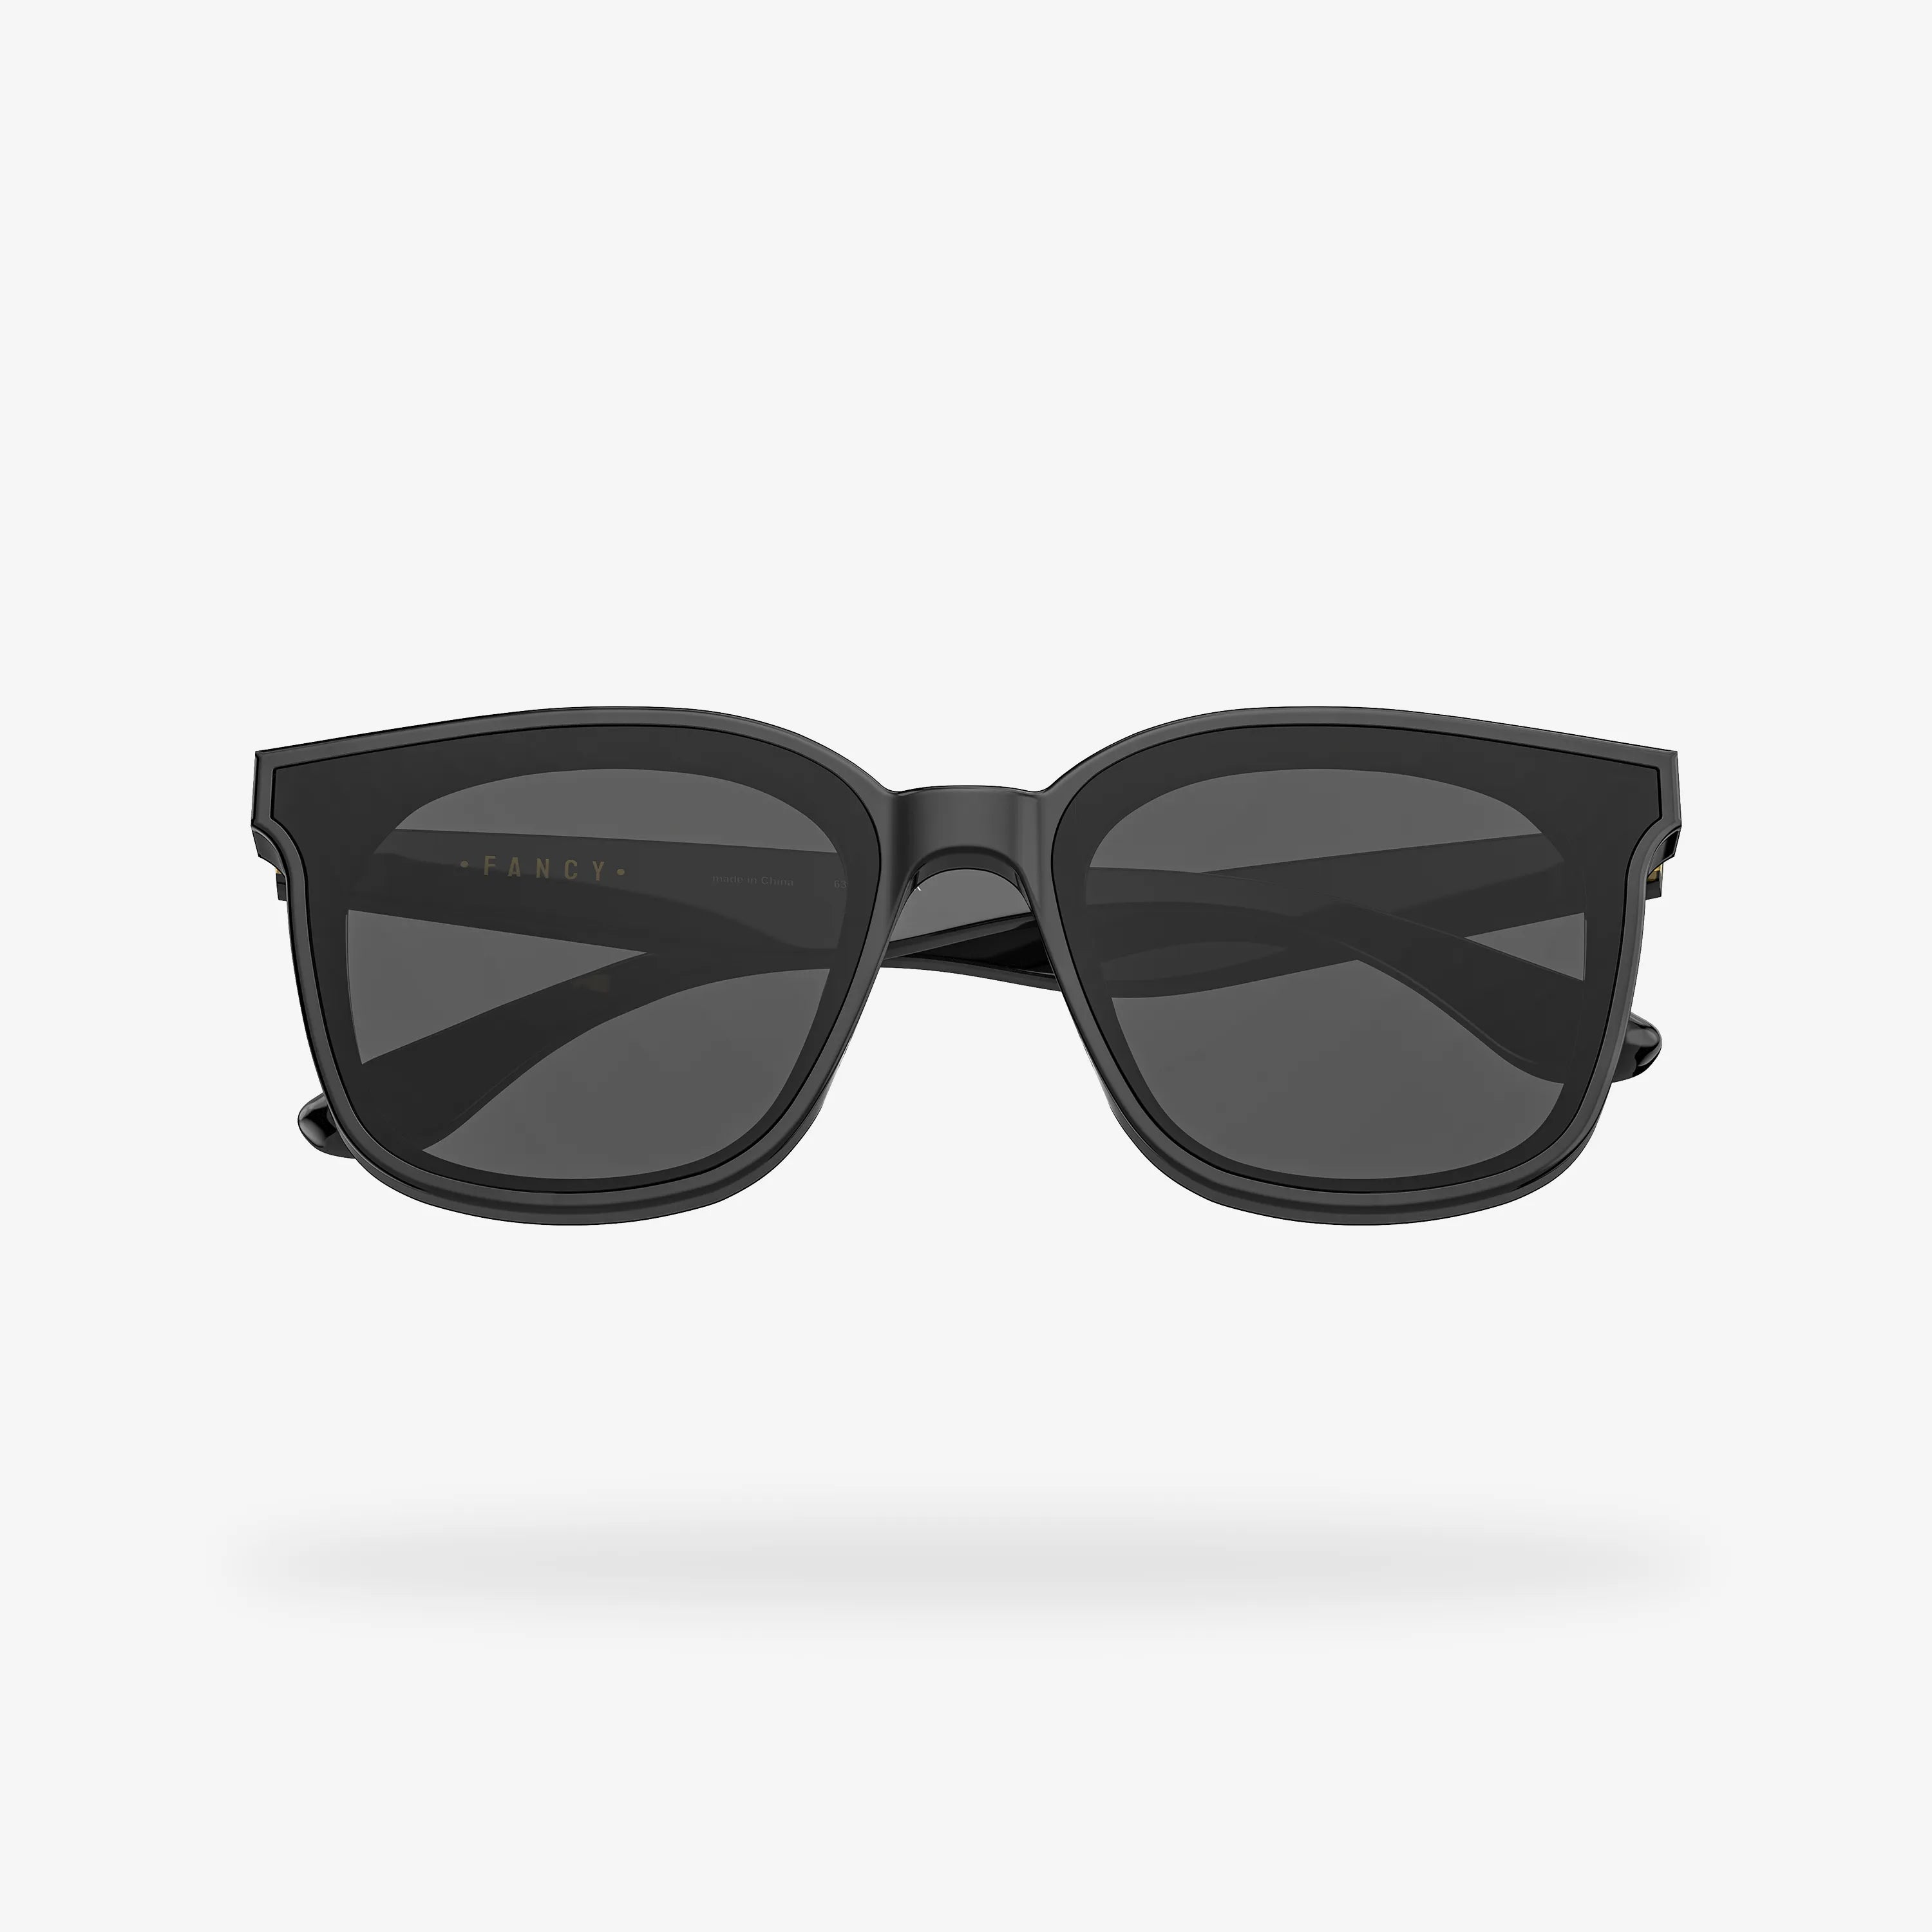 Fancy Black Square Acetate Sunglasses ブラックスクエアアセテートサングラス